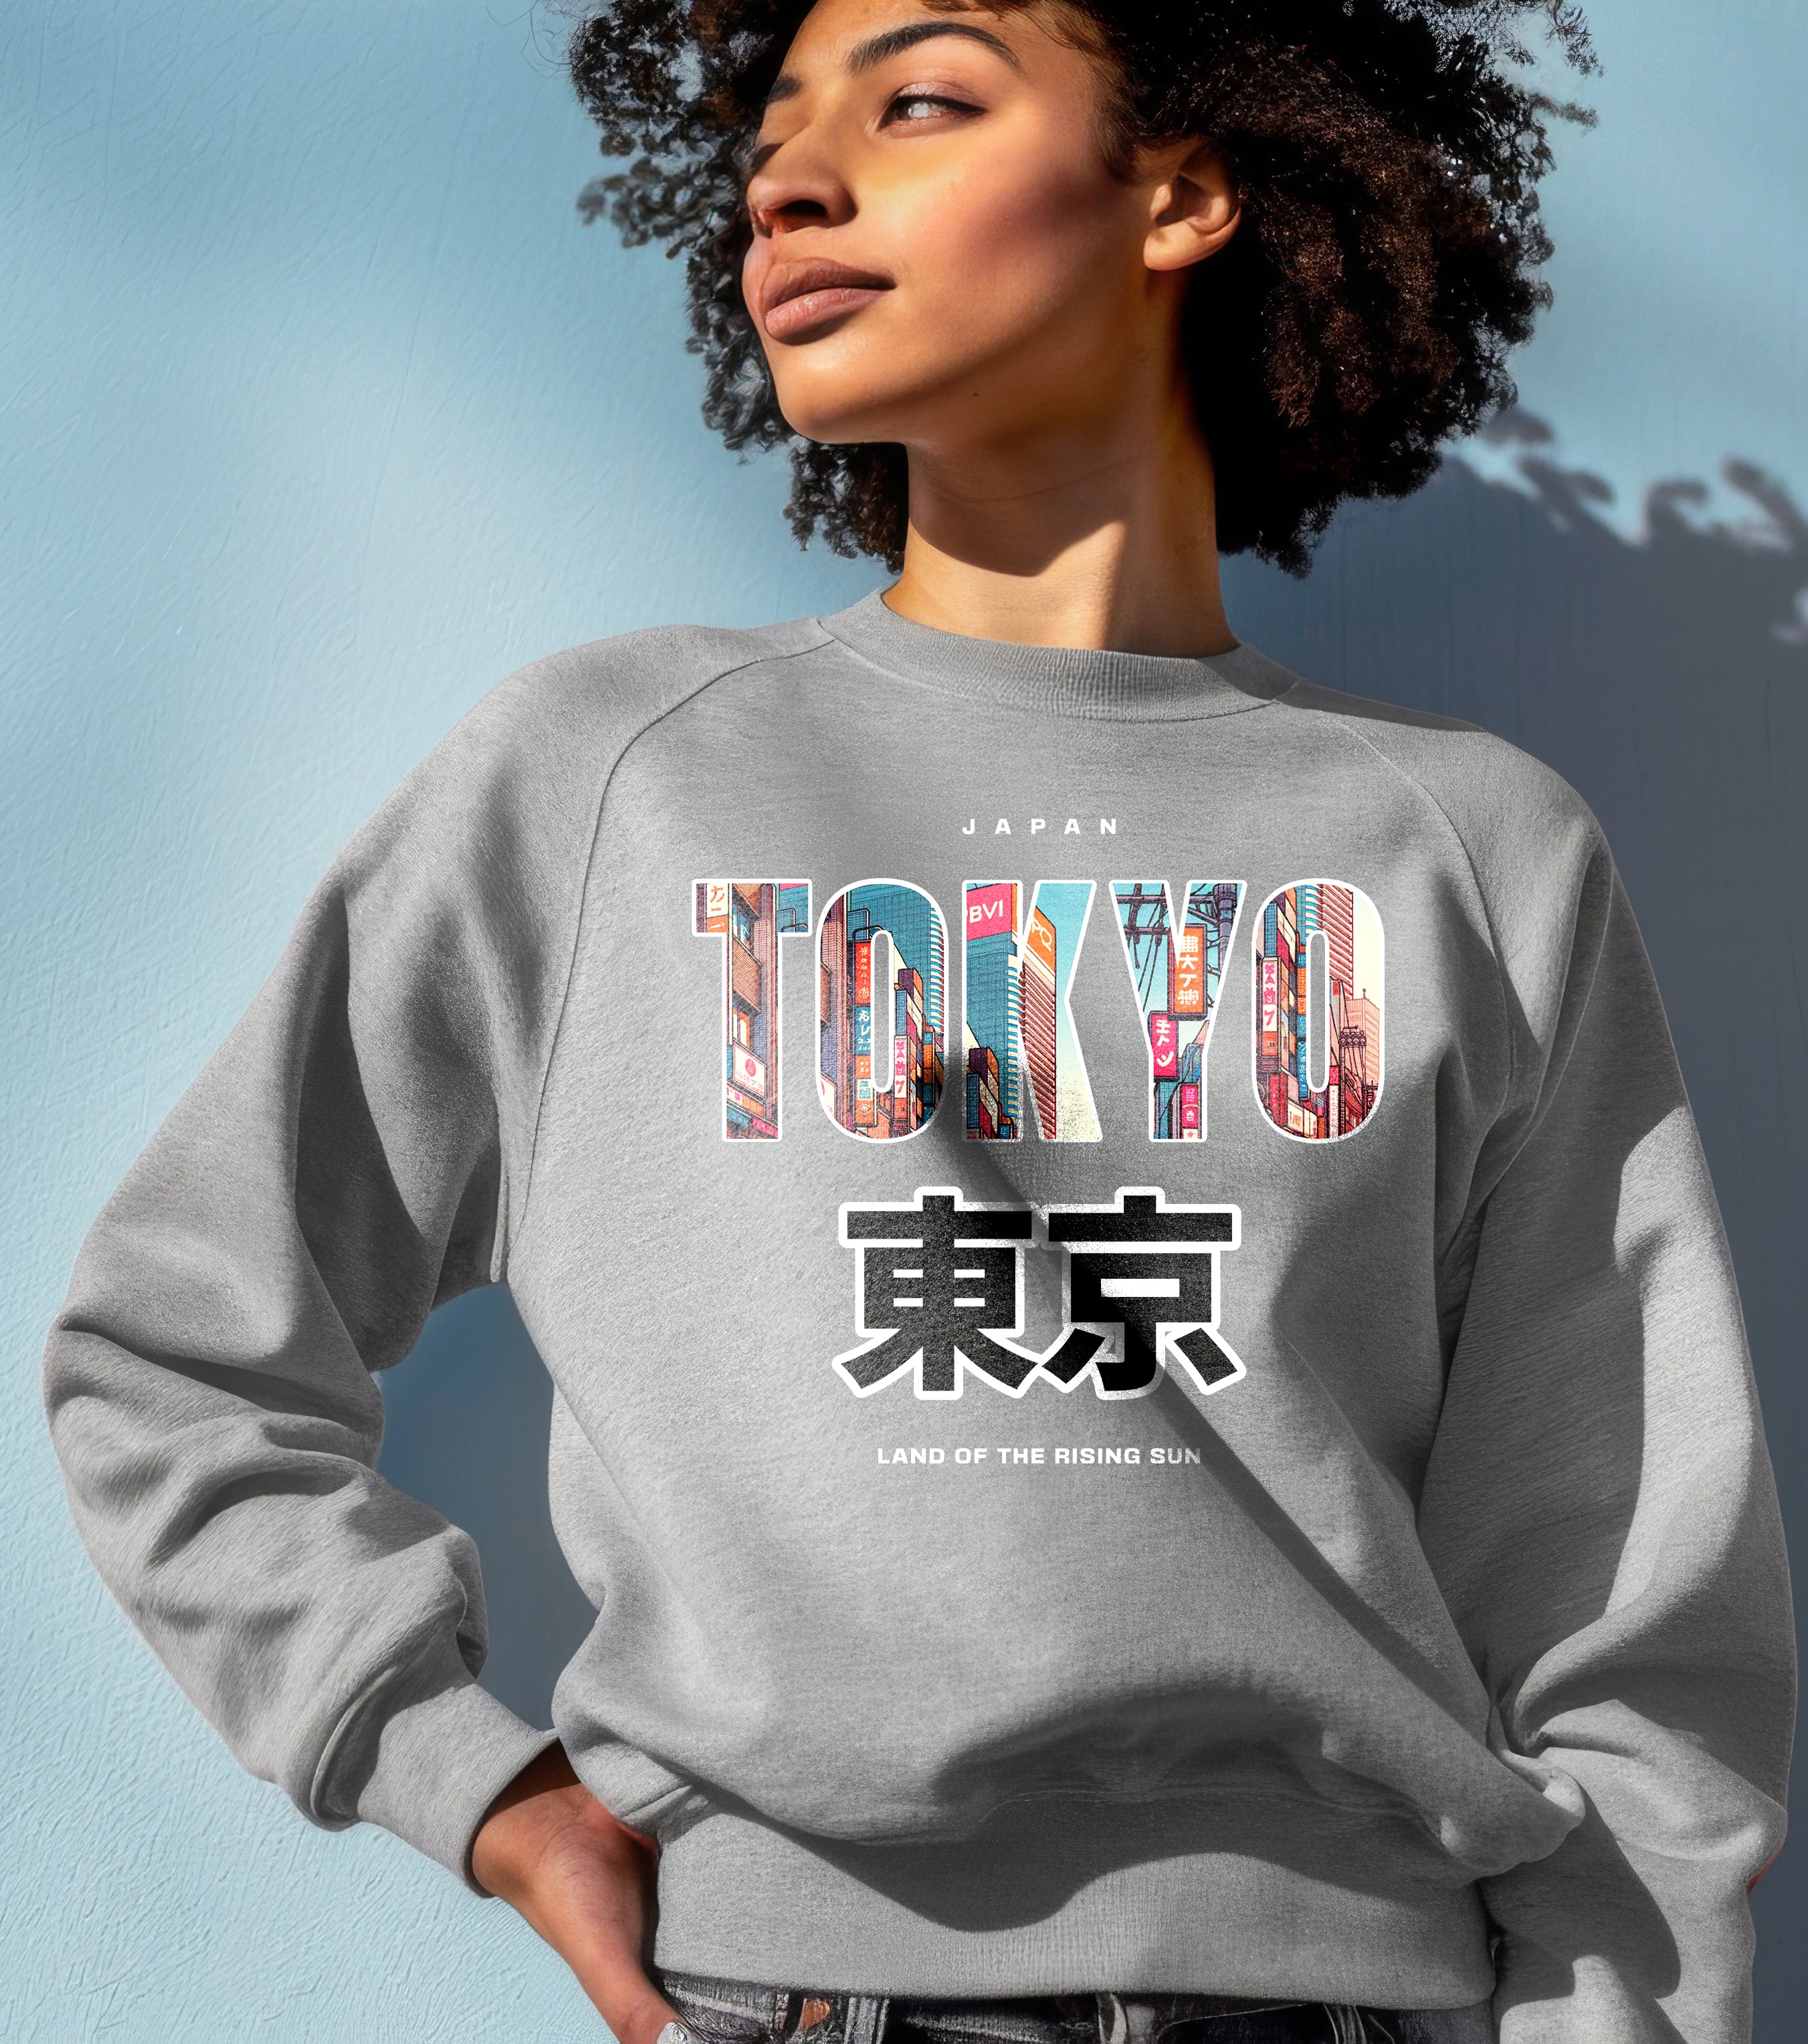 Street Essence: Urban Style Inspired Crewneck Sweatshirts